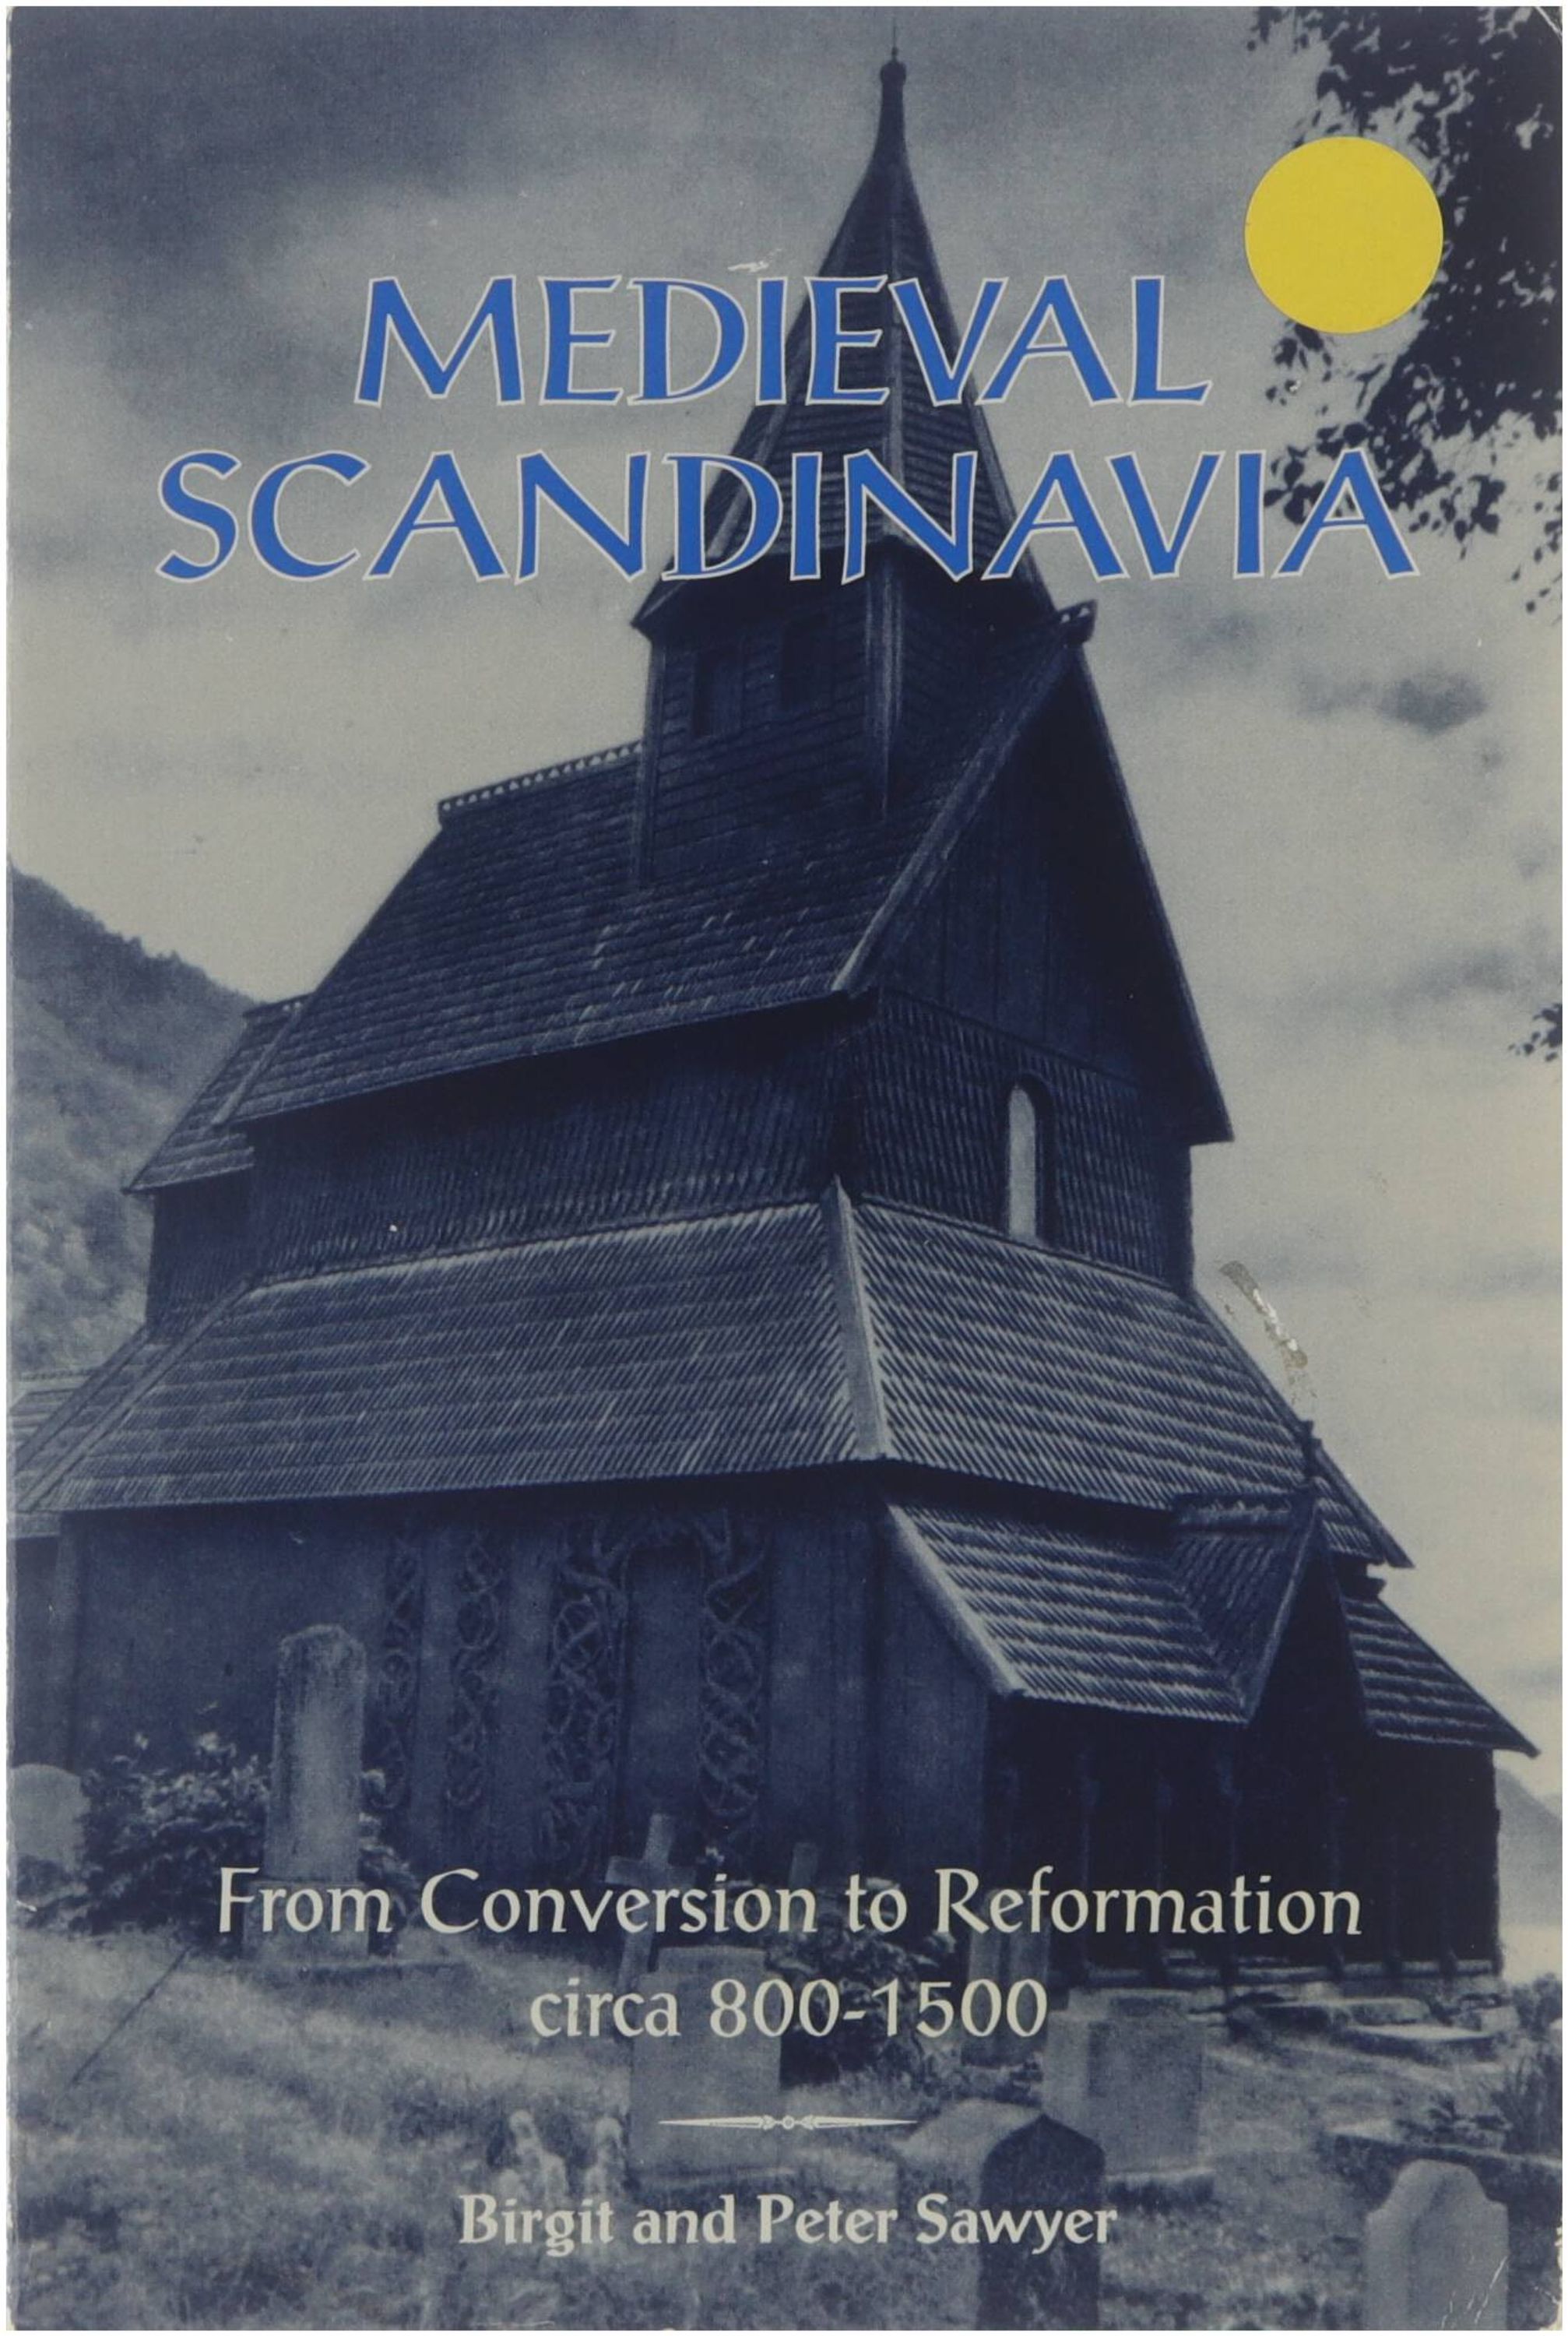 Medieval Scandinavia : from conversion to Reformation, circa 800-1500 - Birgit Sawyer P. H. Sawyer